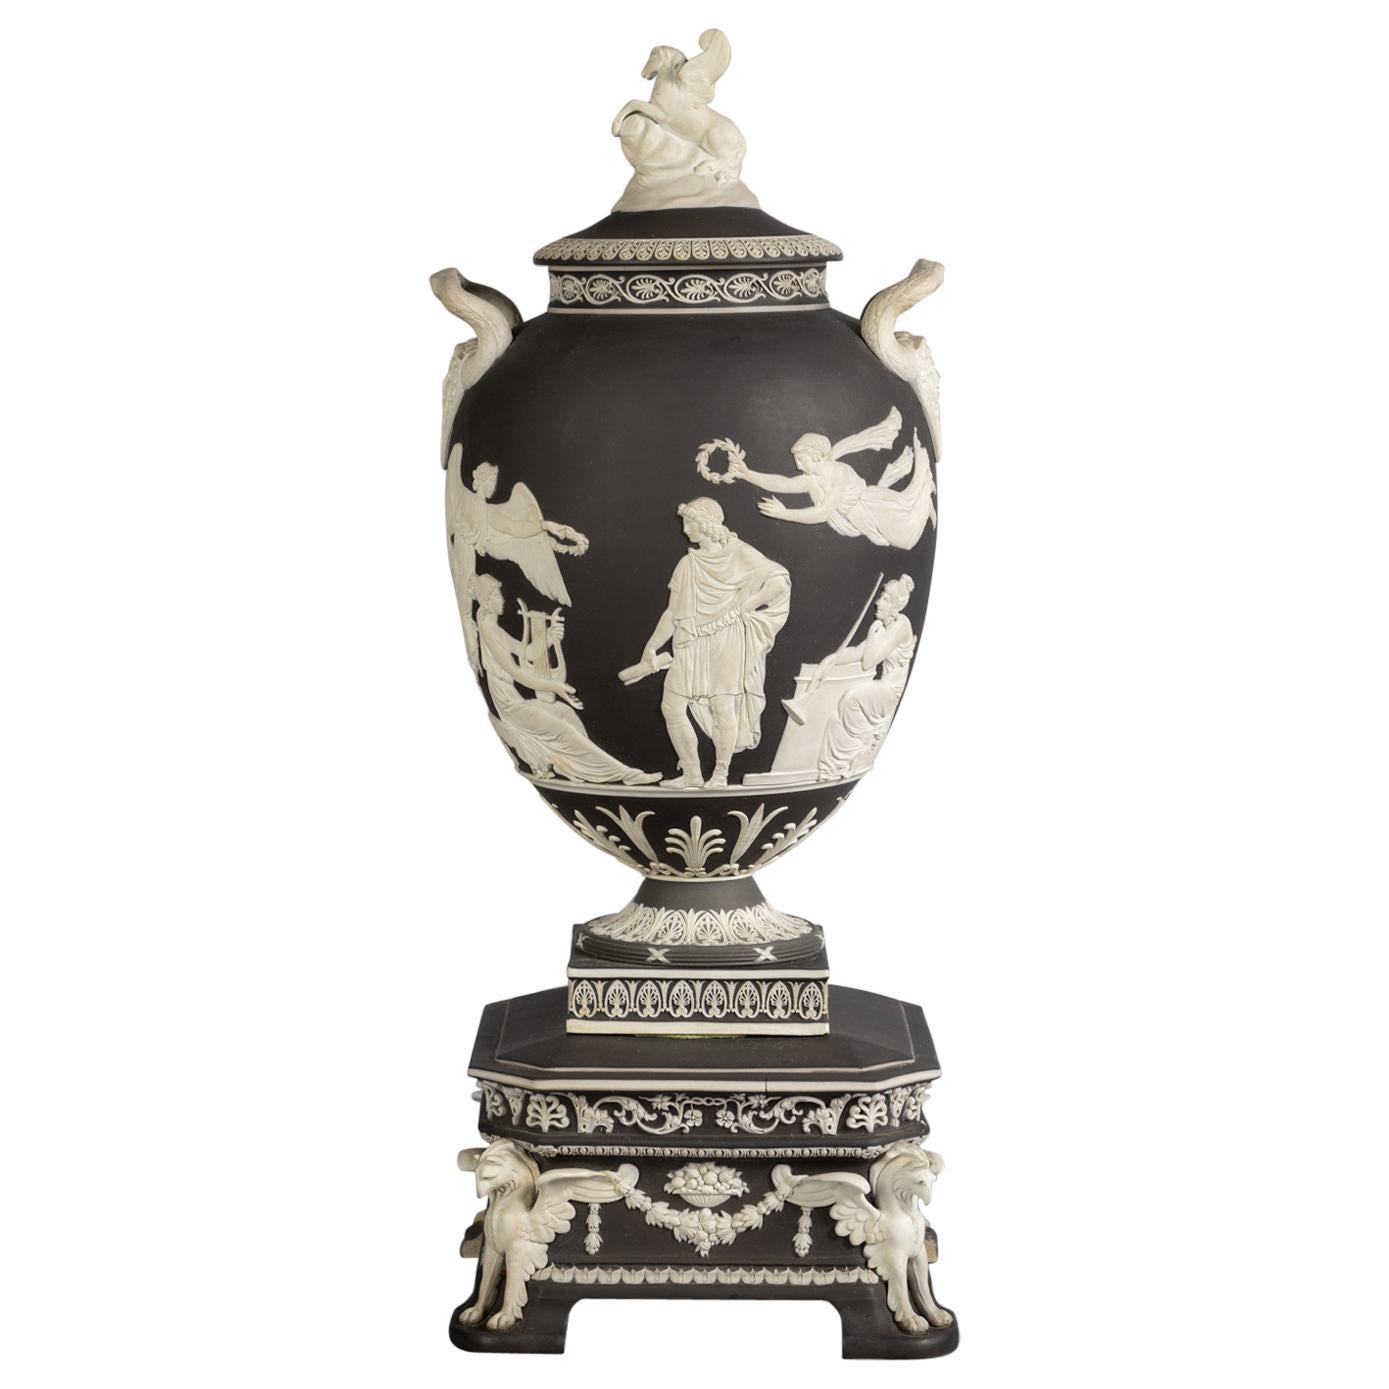 Wedgwood Black and White Jasper "Pegasus" Covered Vase, 19th Century